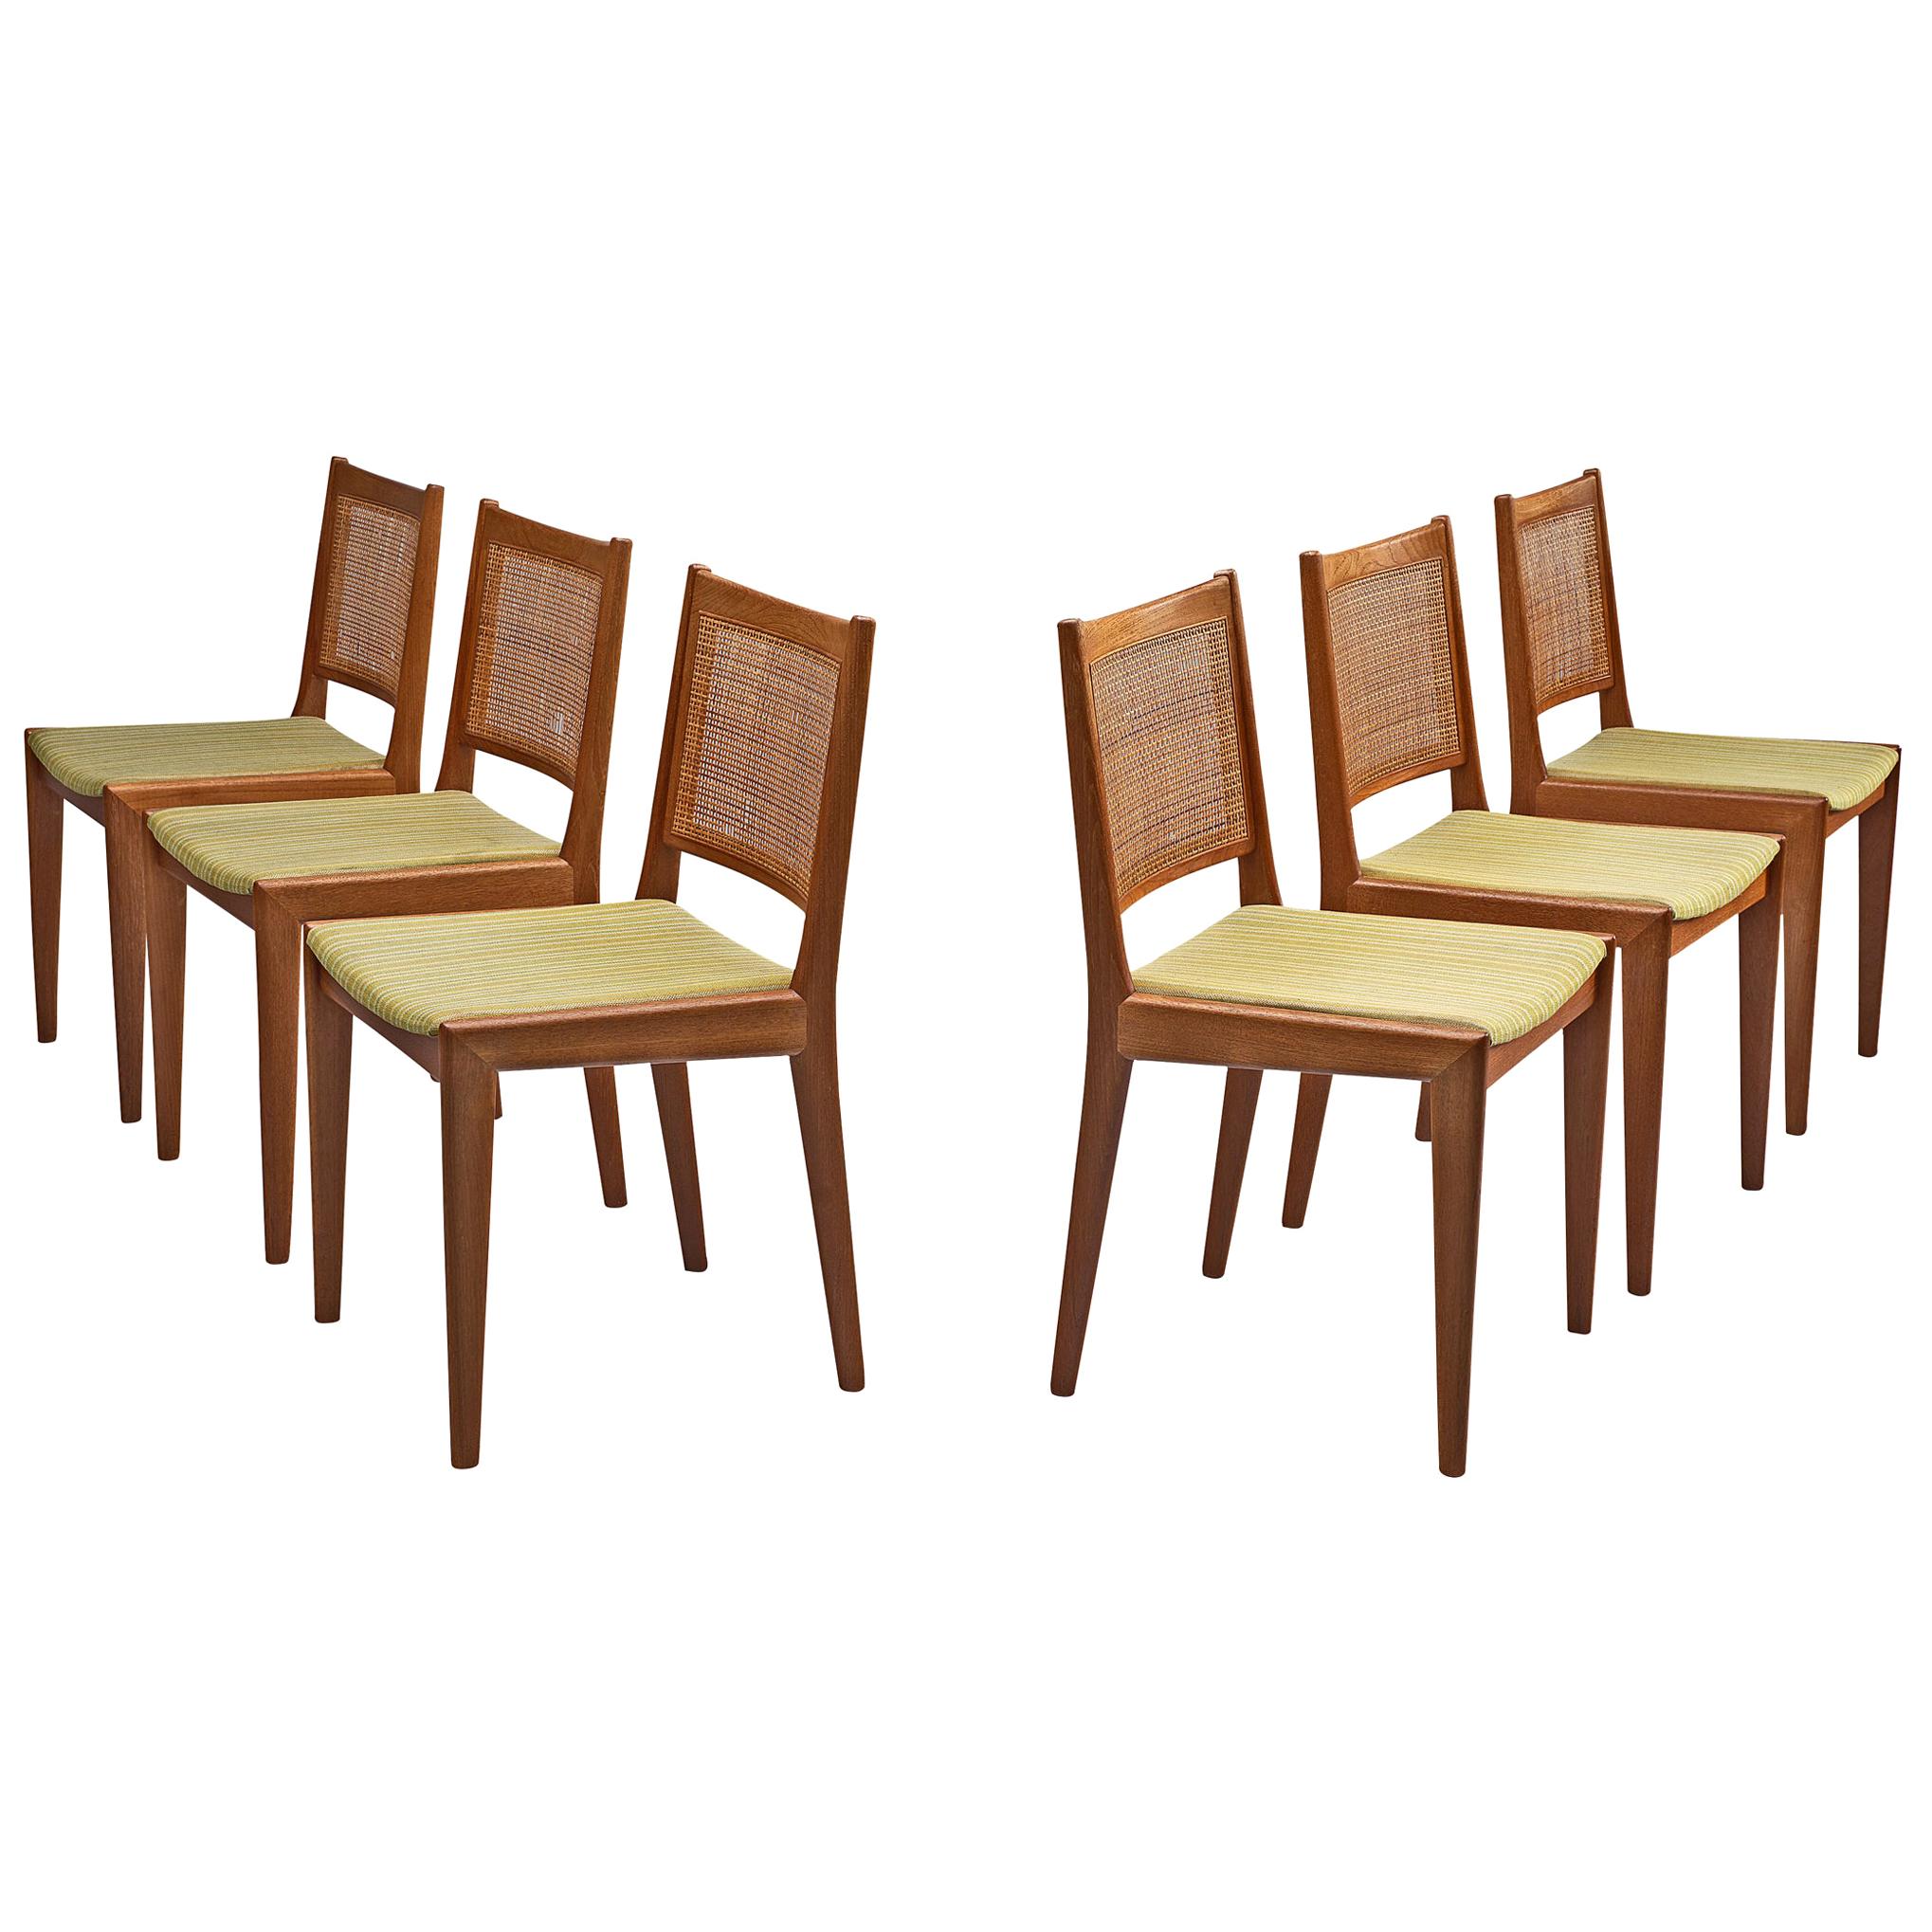 Karl-Erik Ekselius Set of Six Dining Chairs in Teak and Cane